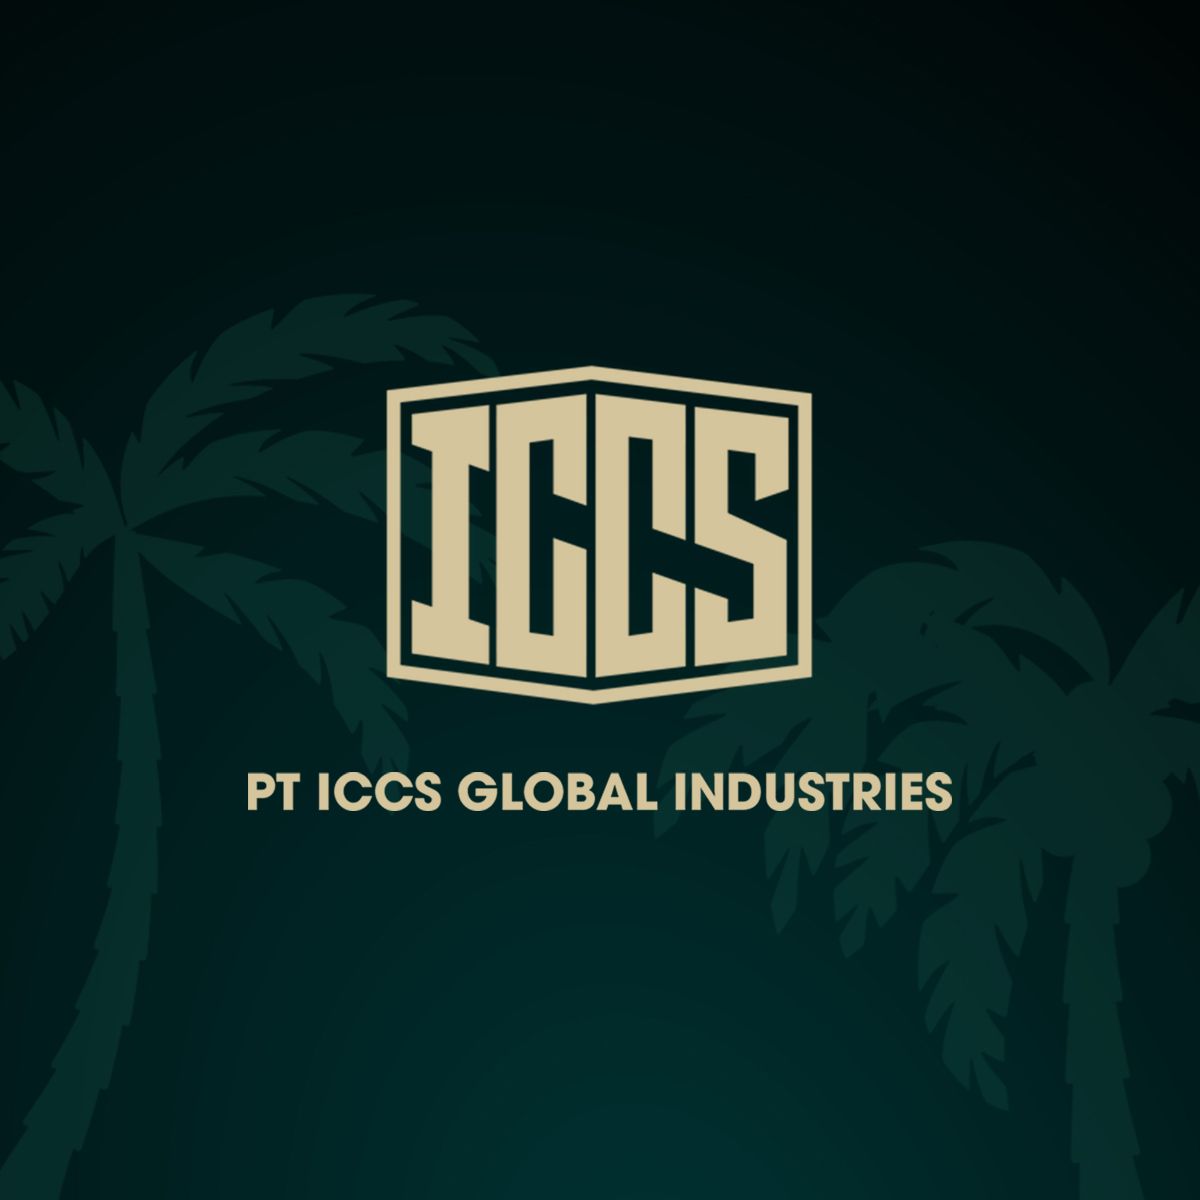 PT ICCS GLOBAL INDUSTRIES